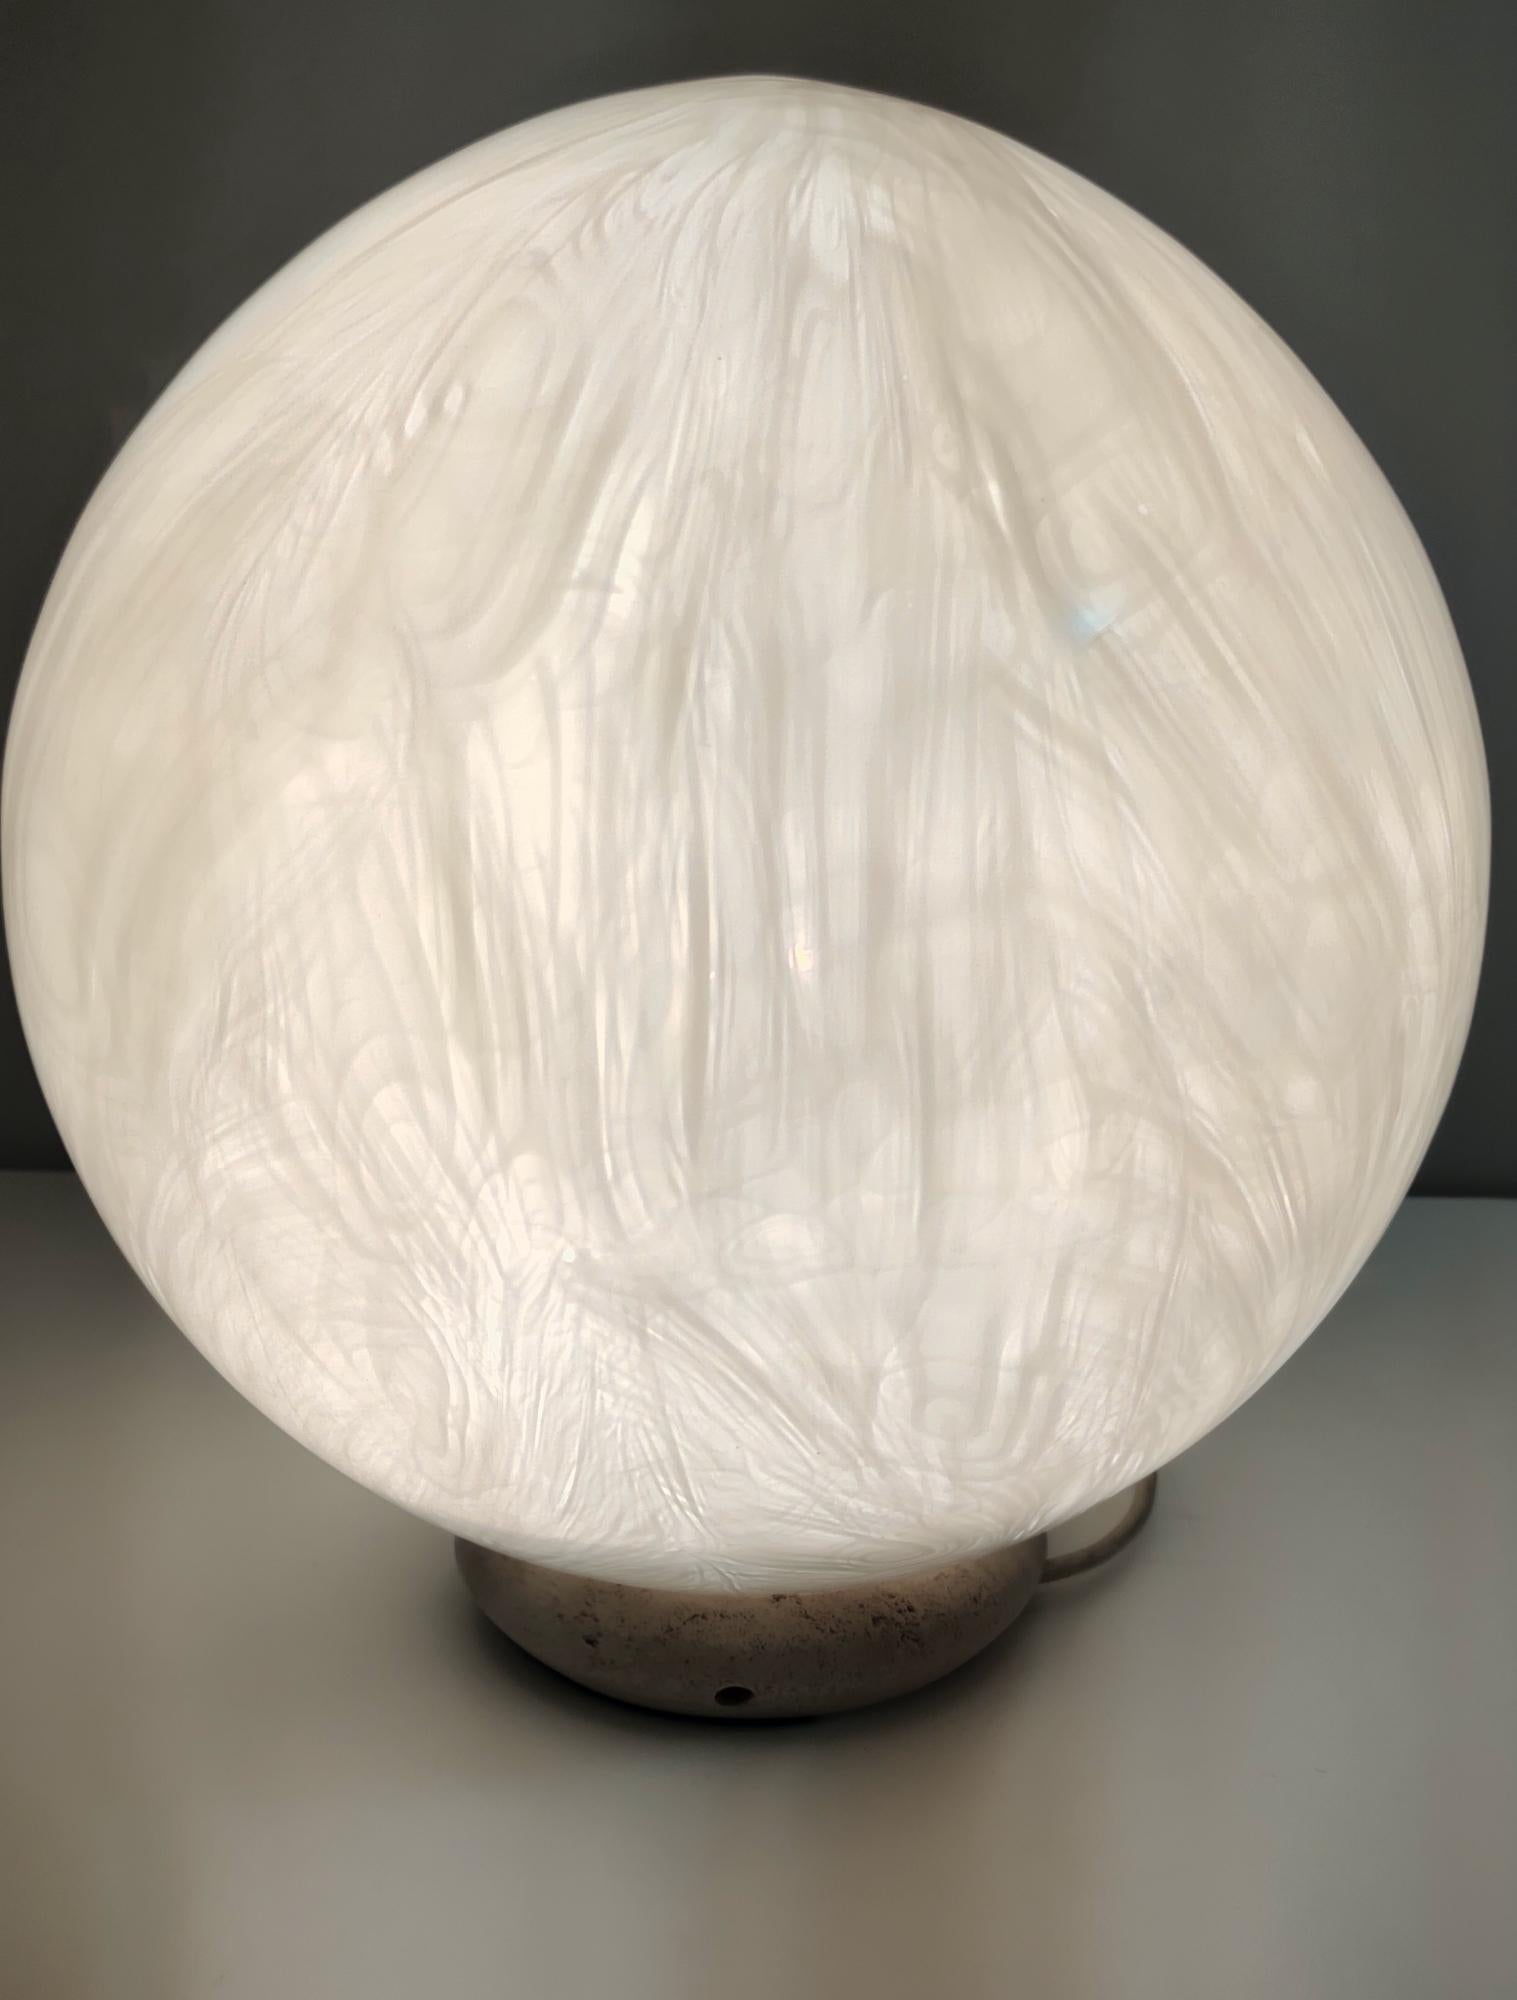 Verre de Murano Lampe de bureau postmoderne en verre soufflé de Murano blanc par La Murrina avec Murrines, Italie en vente